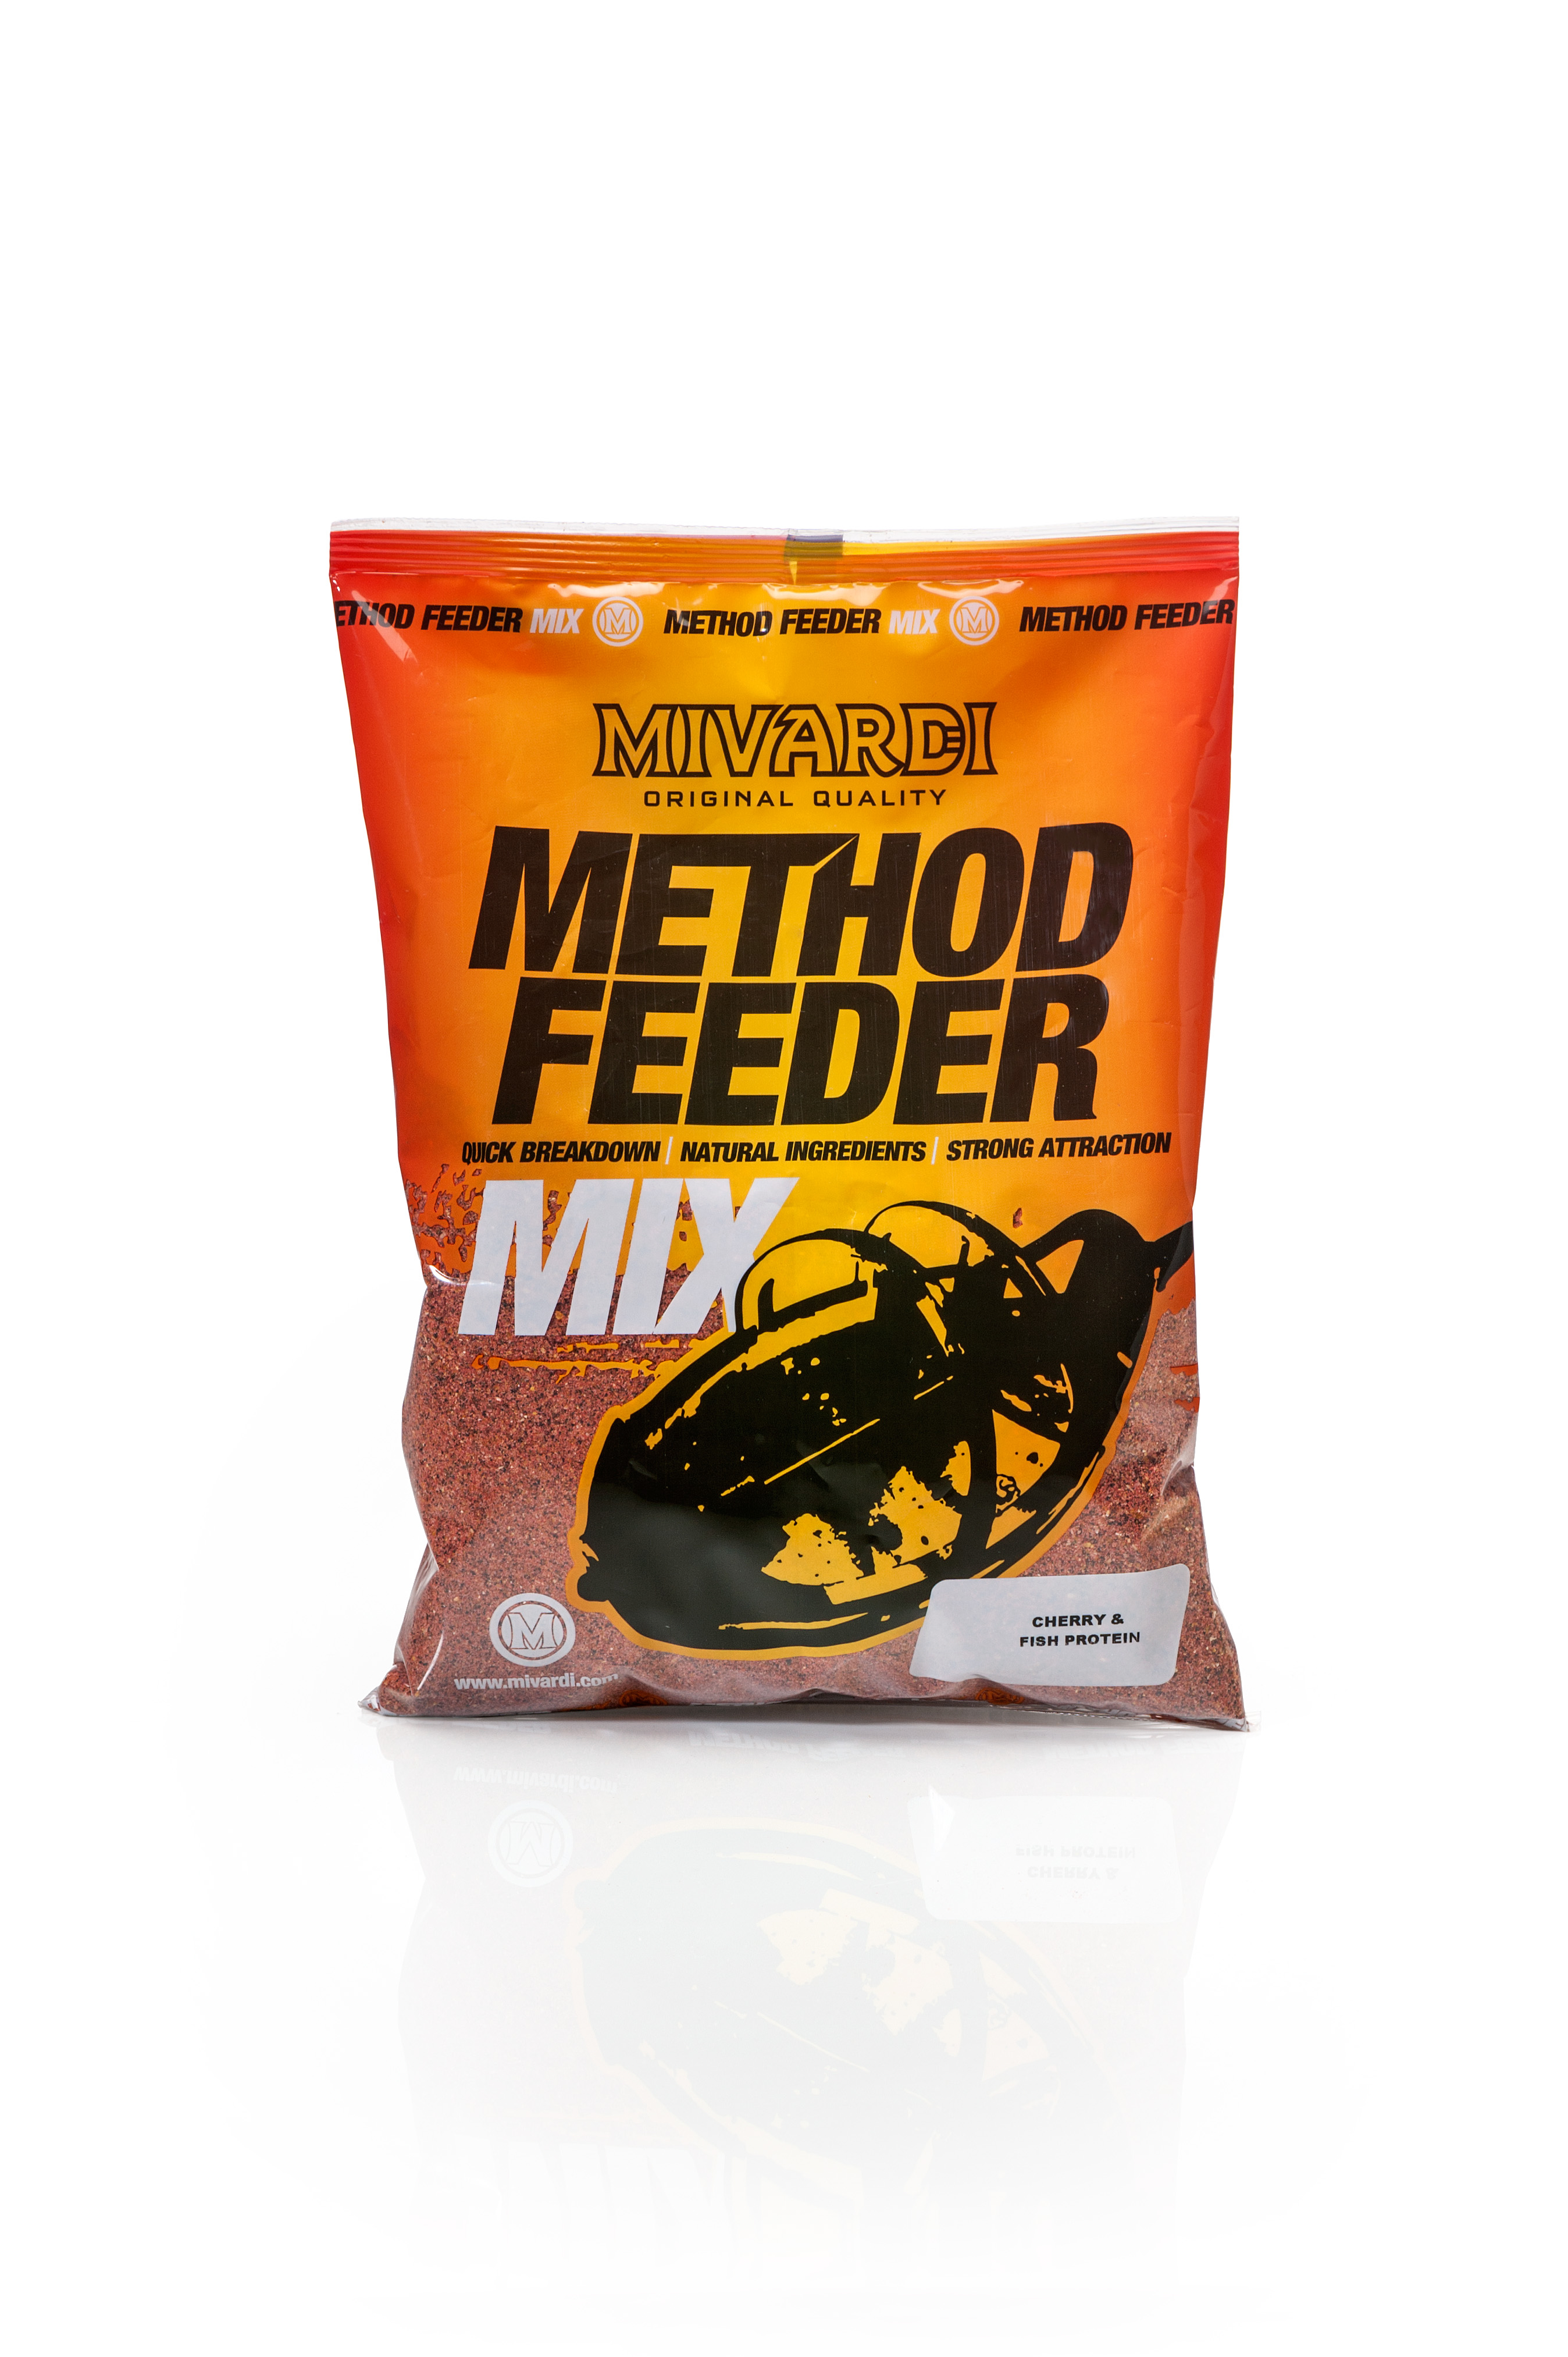 Method feeder mix - Cherry & fish protein